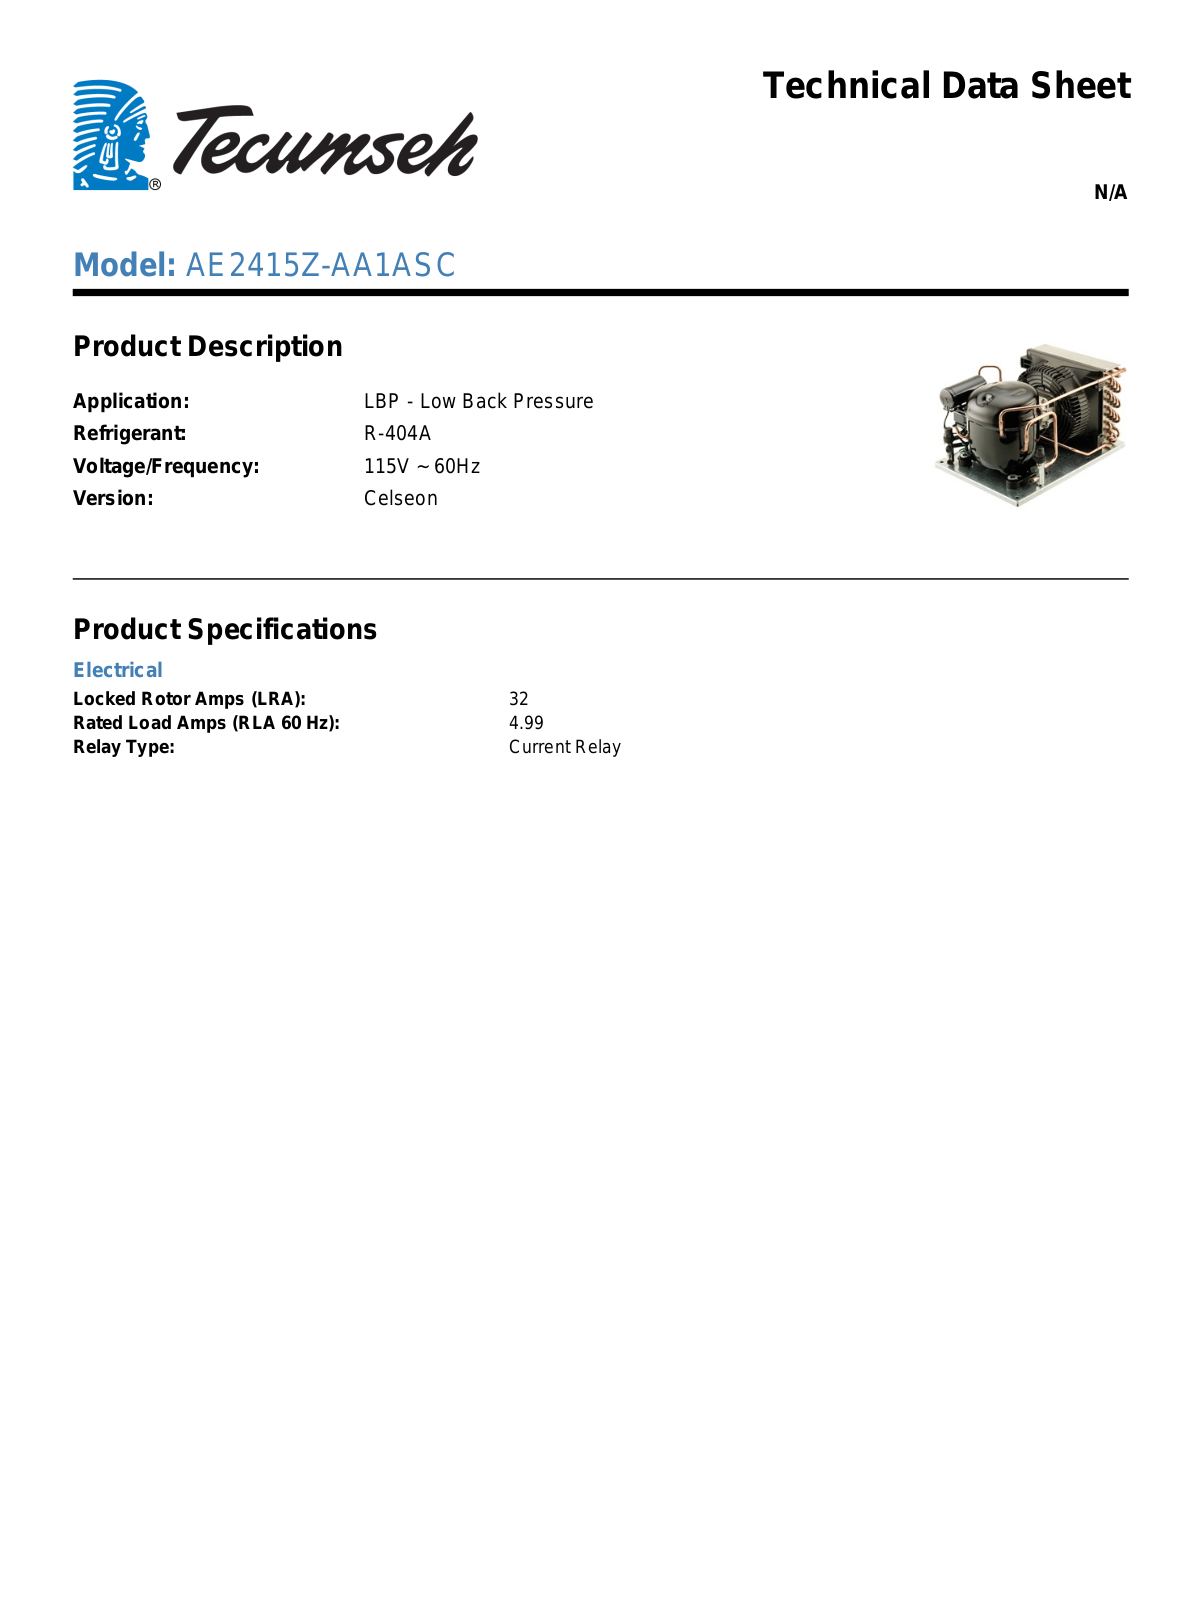 Tecumseh AE2415Z-AA1ASC Technical Data Sheet